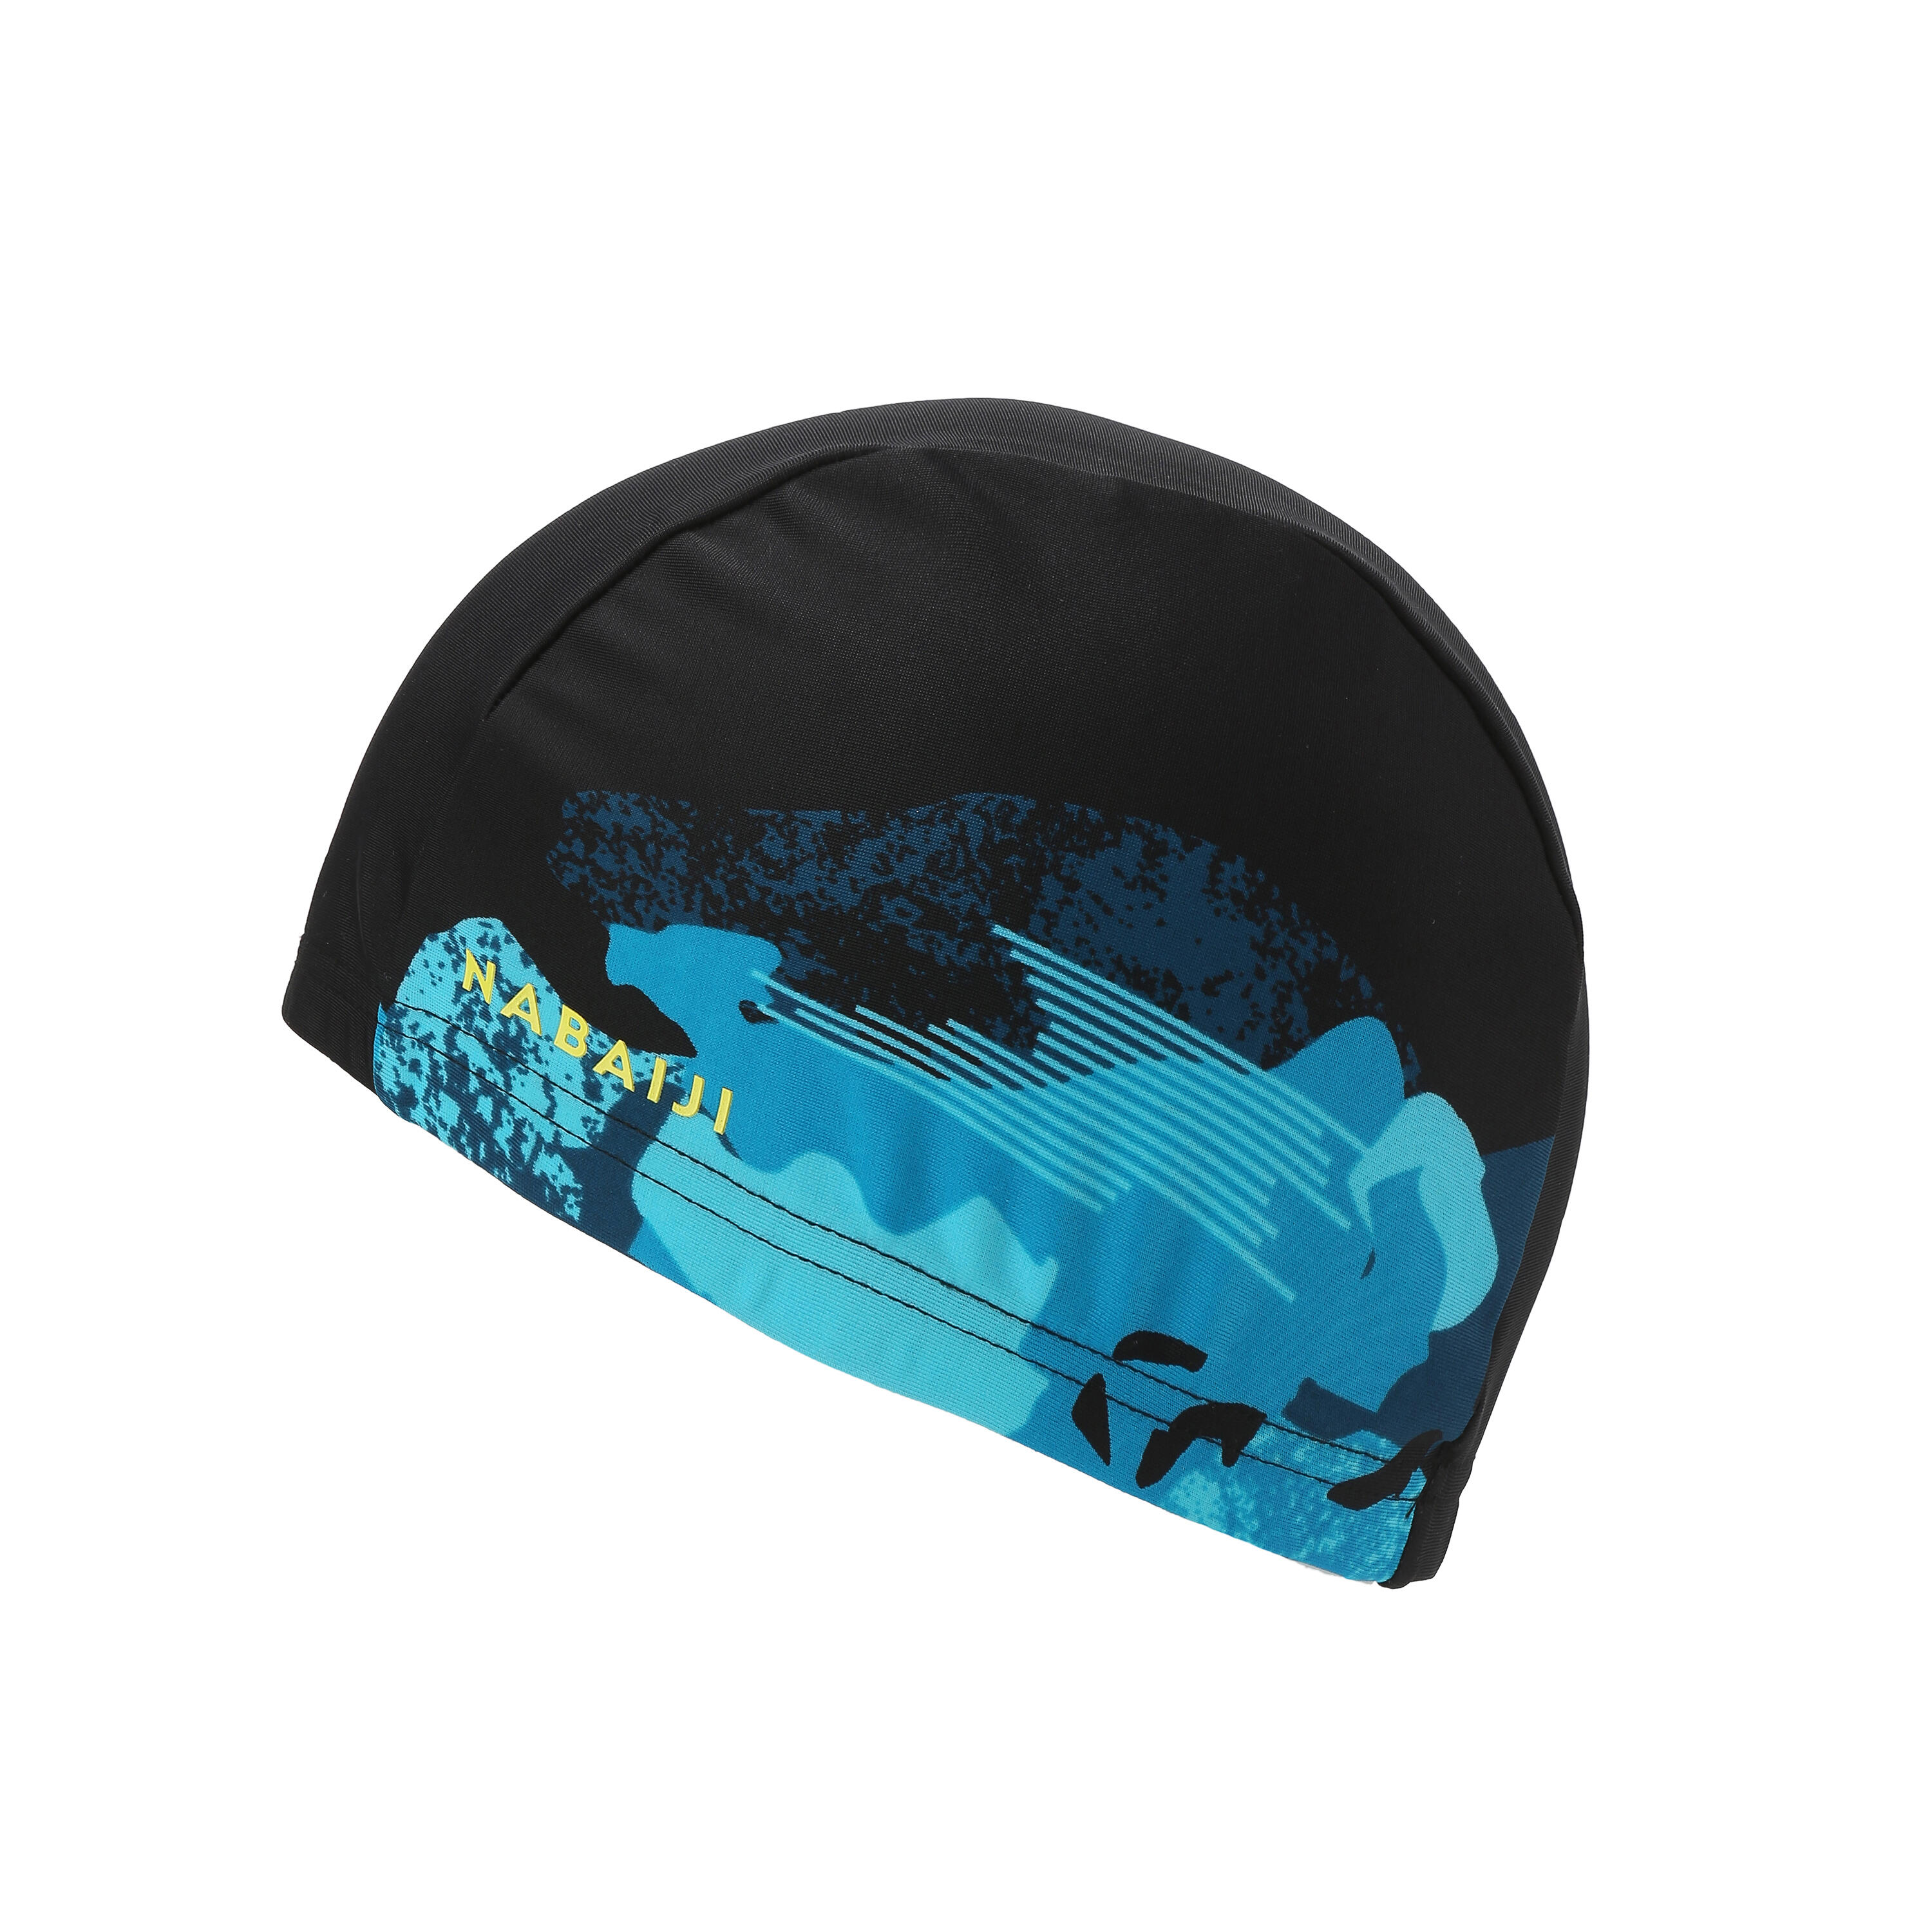 Mesh swim cap - Printed fabric - Camo black blue 2/5